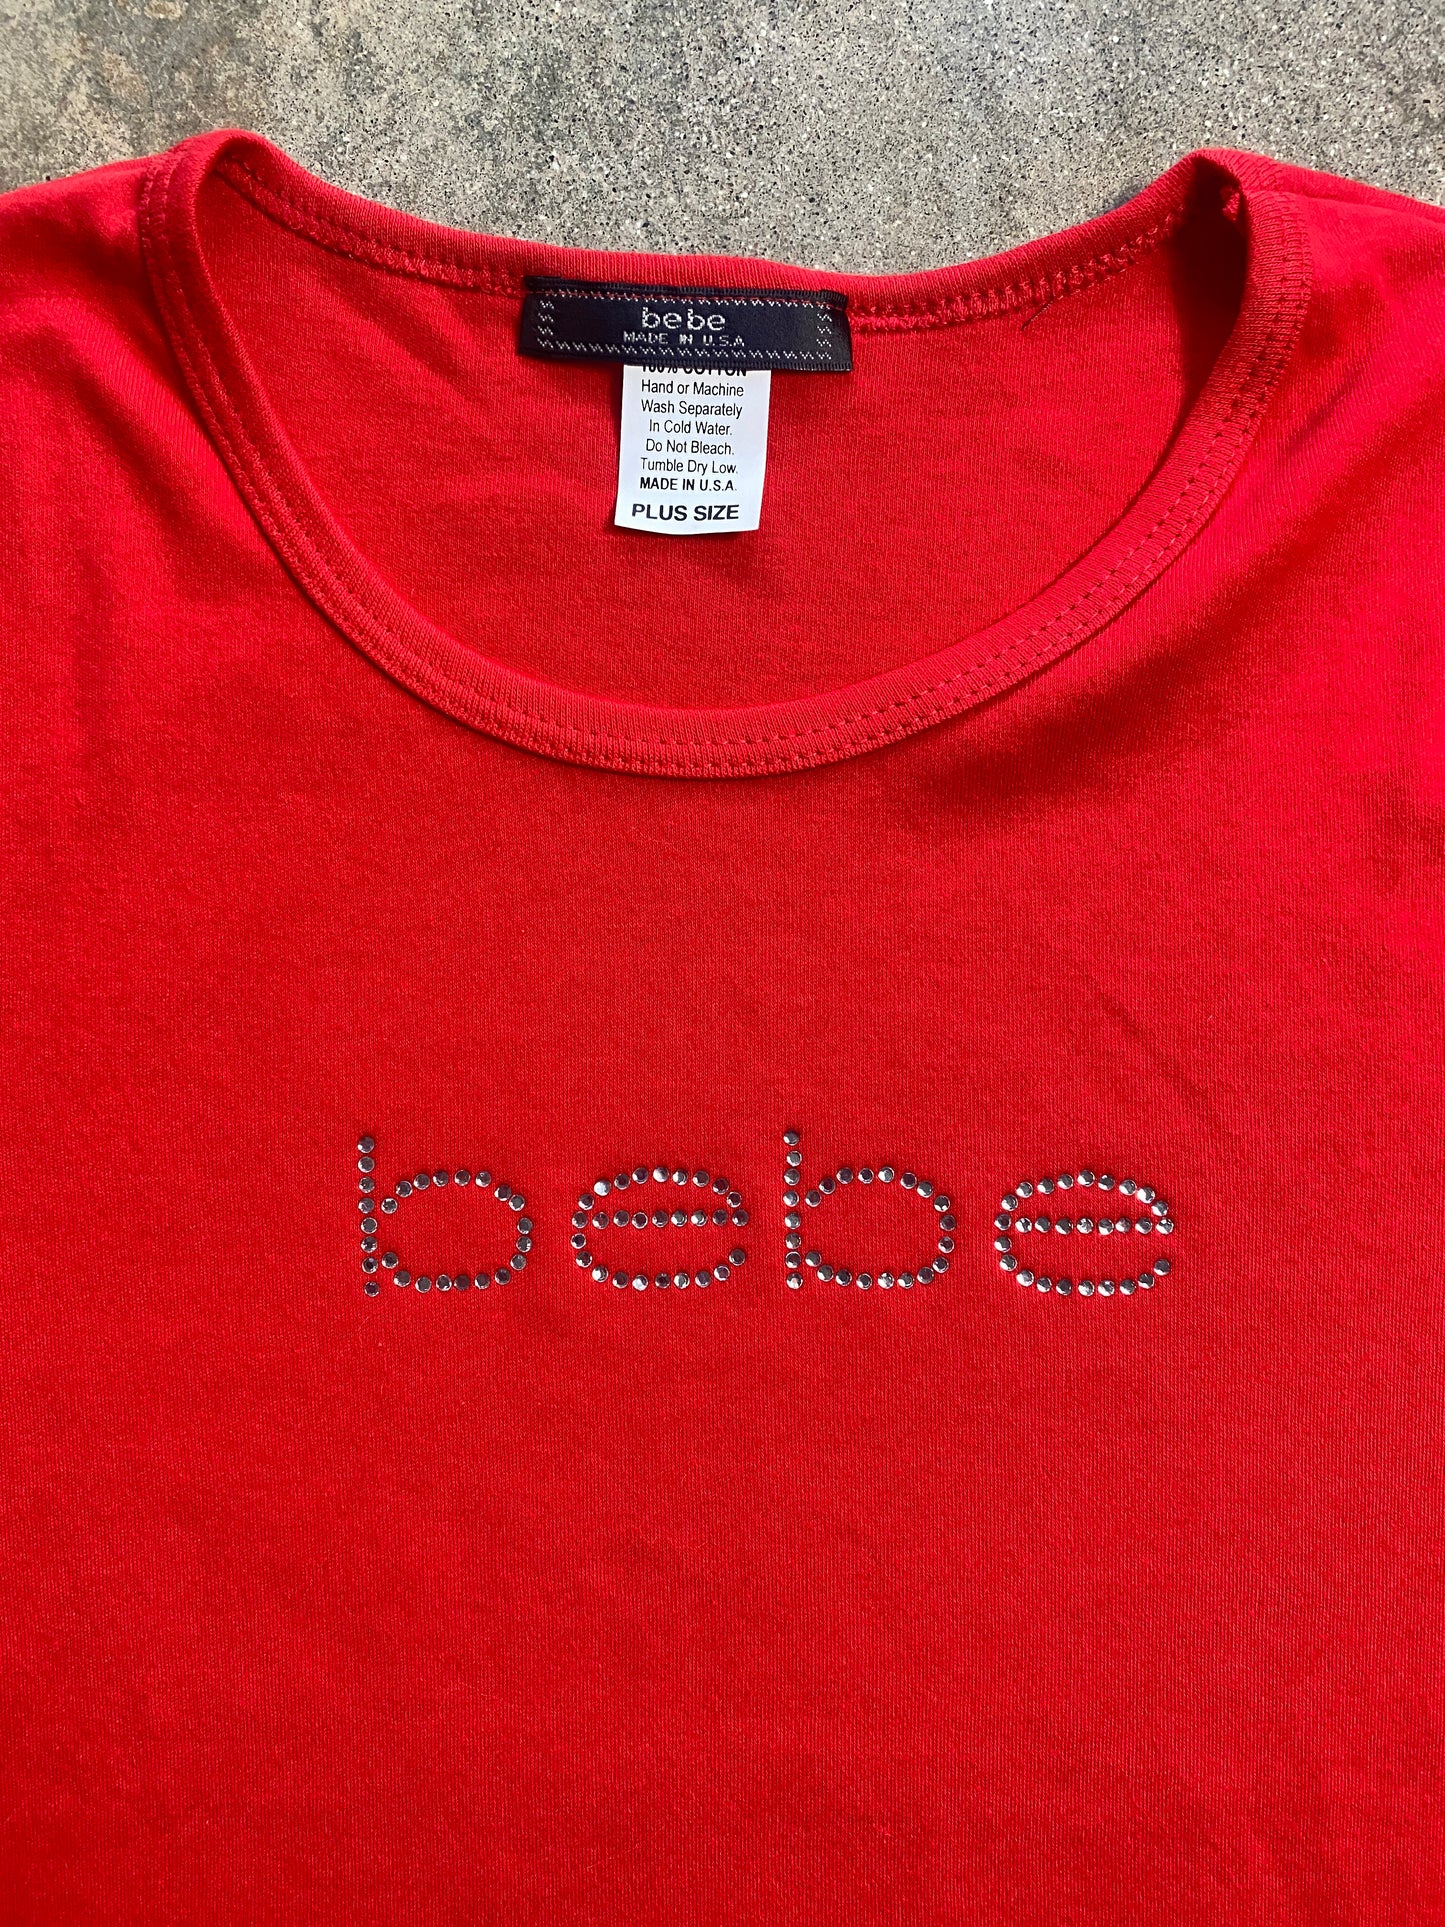 00's Red Bebe Baby Tee